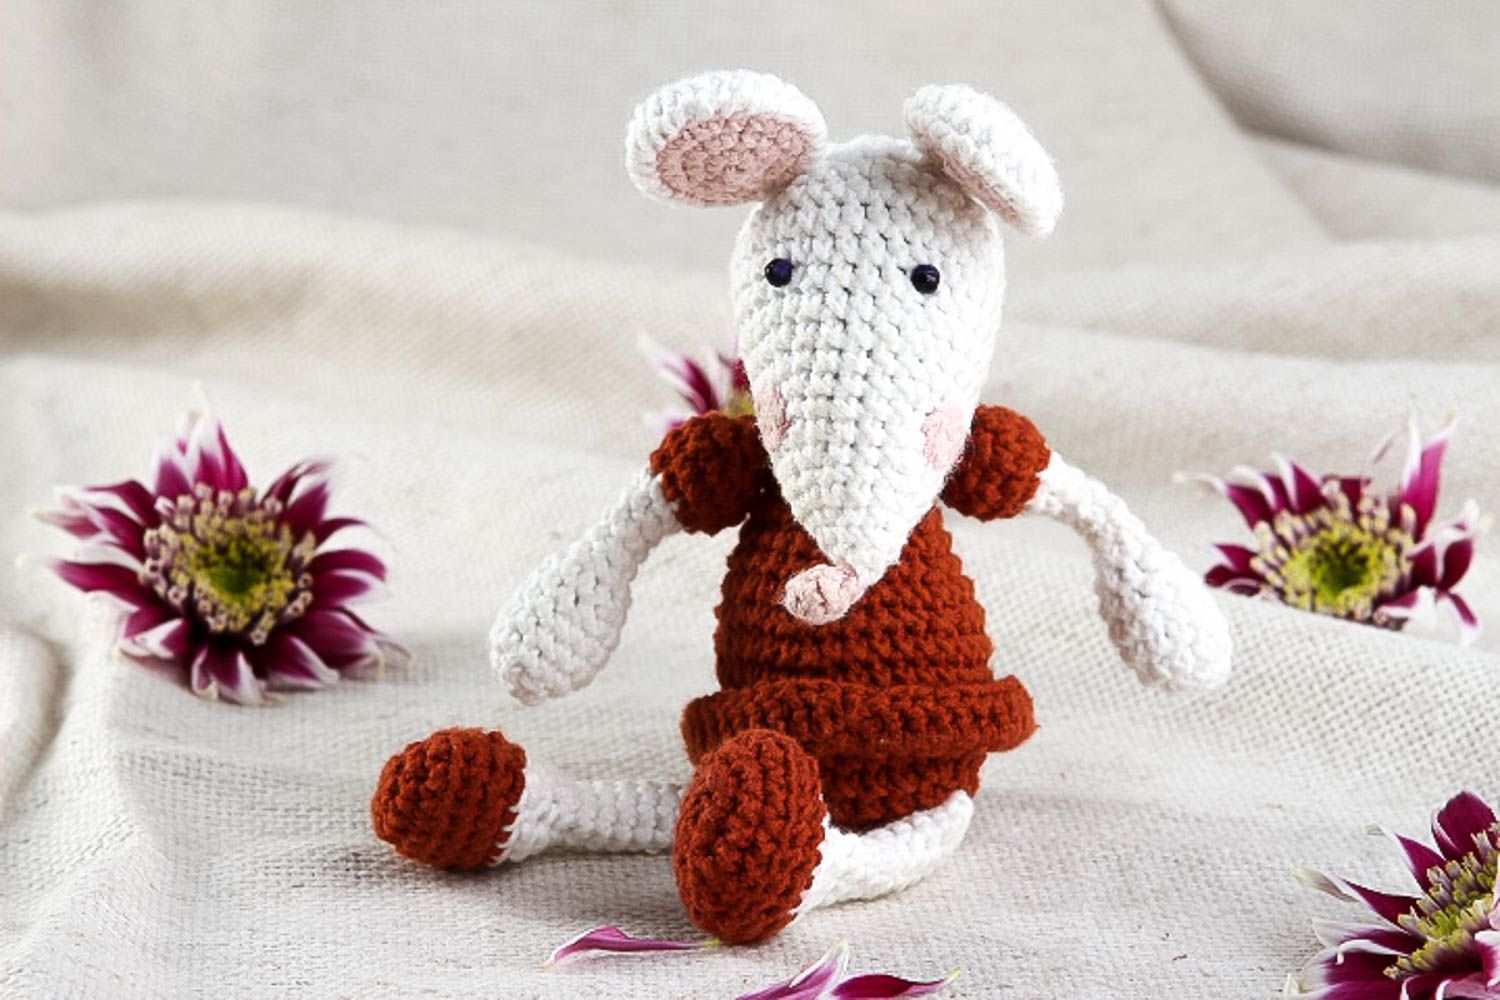 Handmade crocheted doll for children crocheted mouse toy nursery decor ideas photo 1